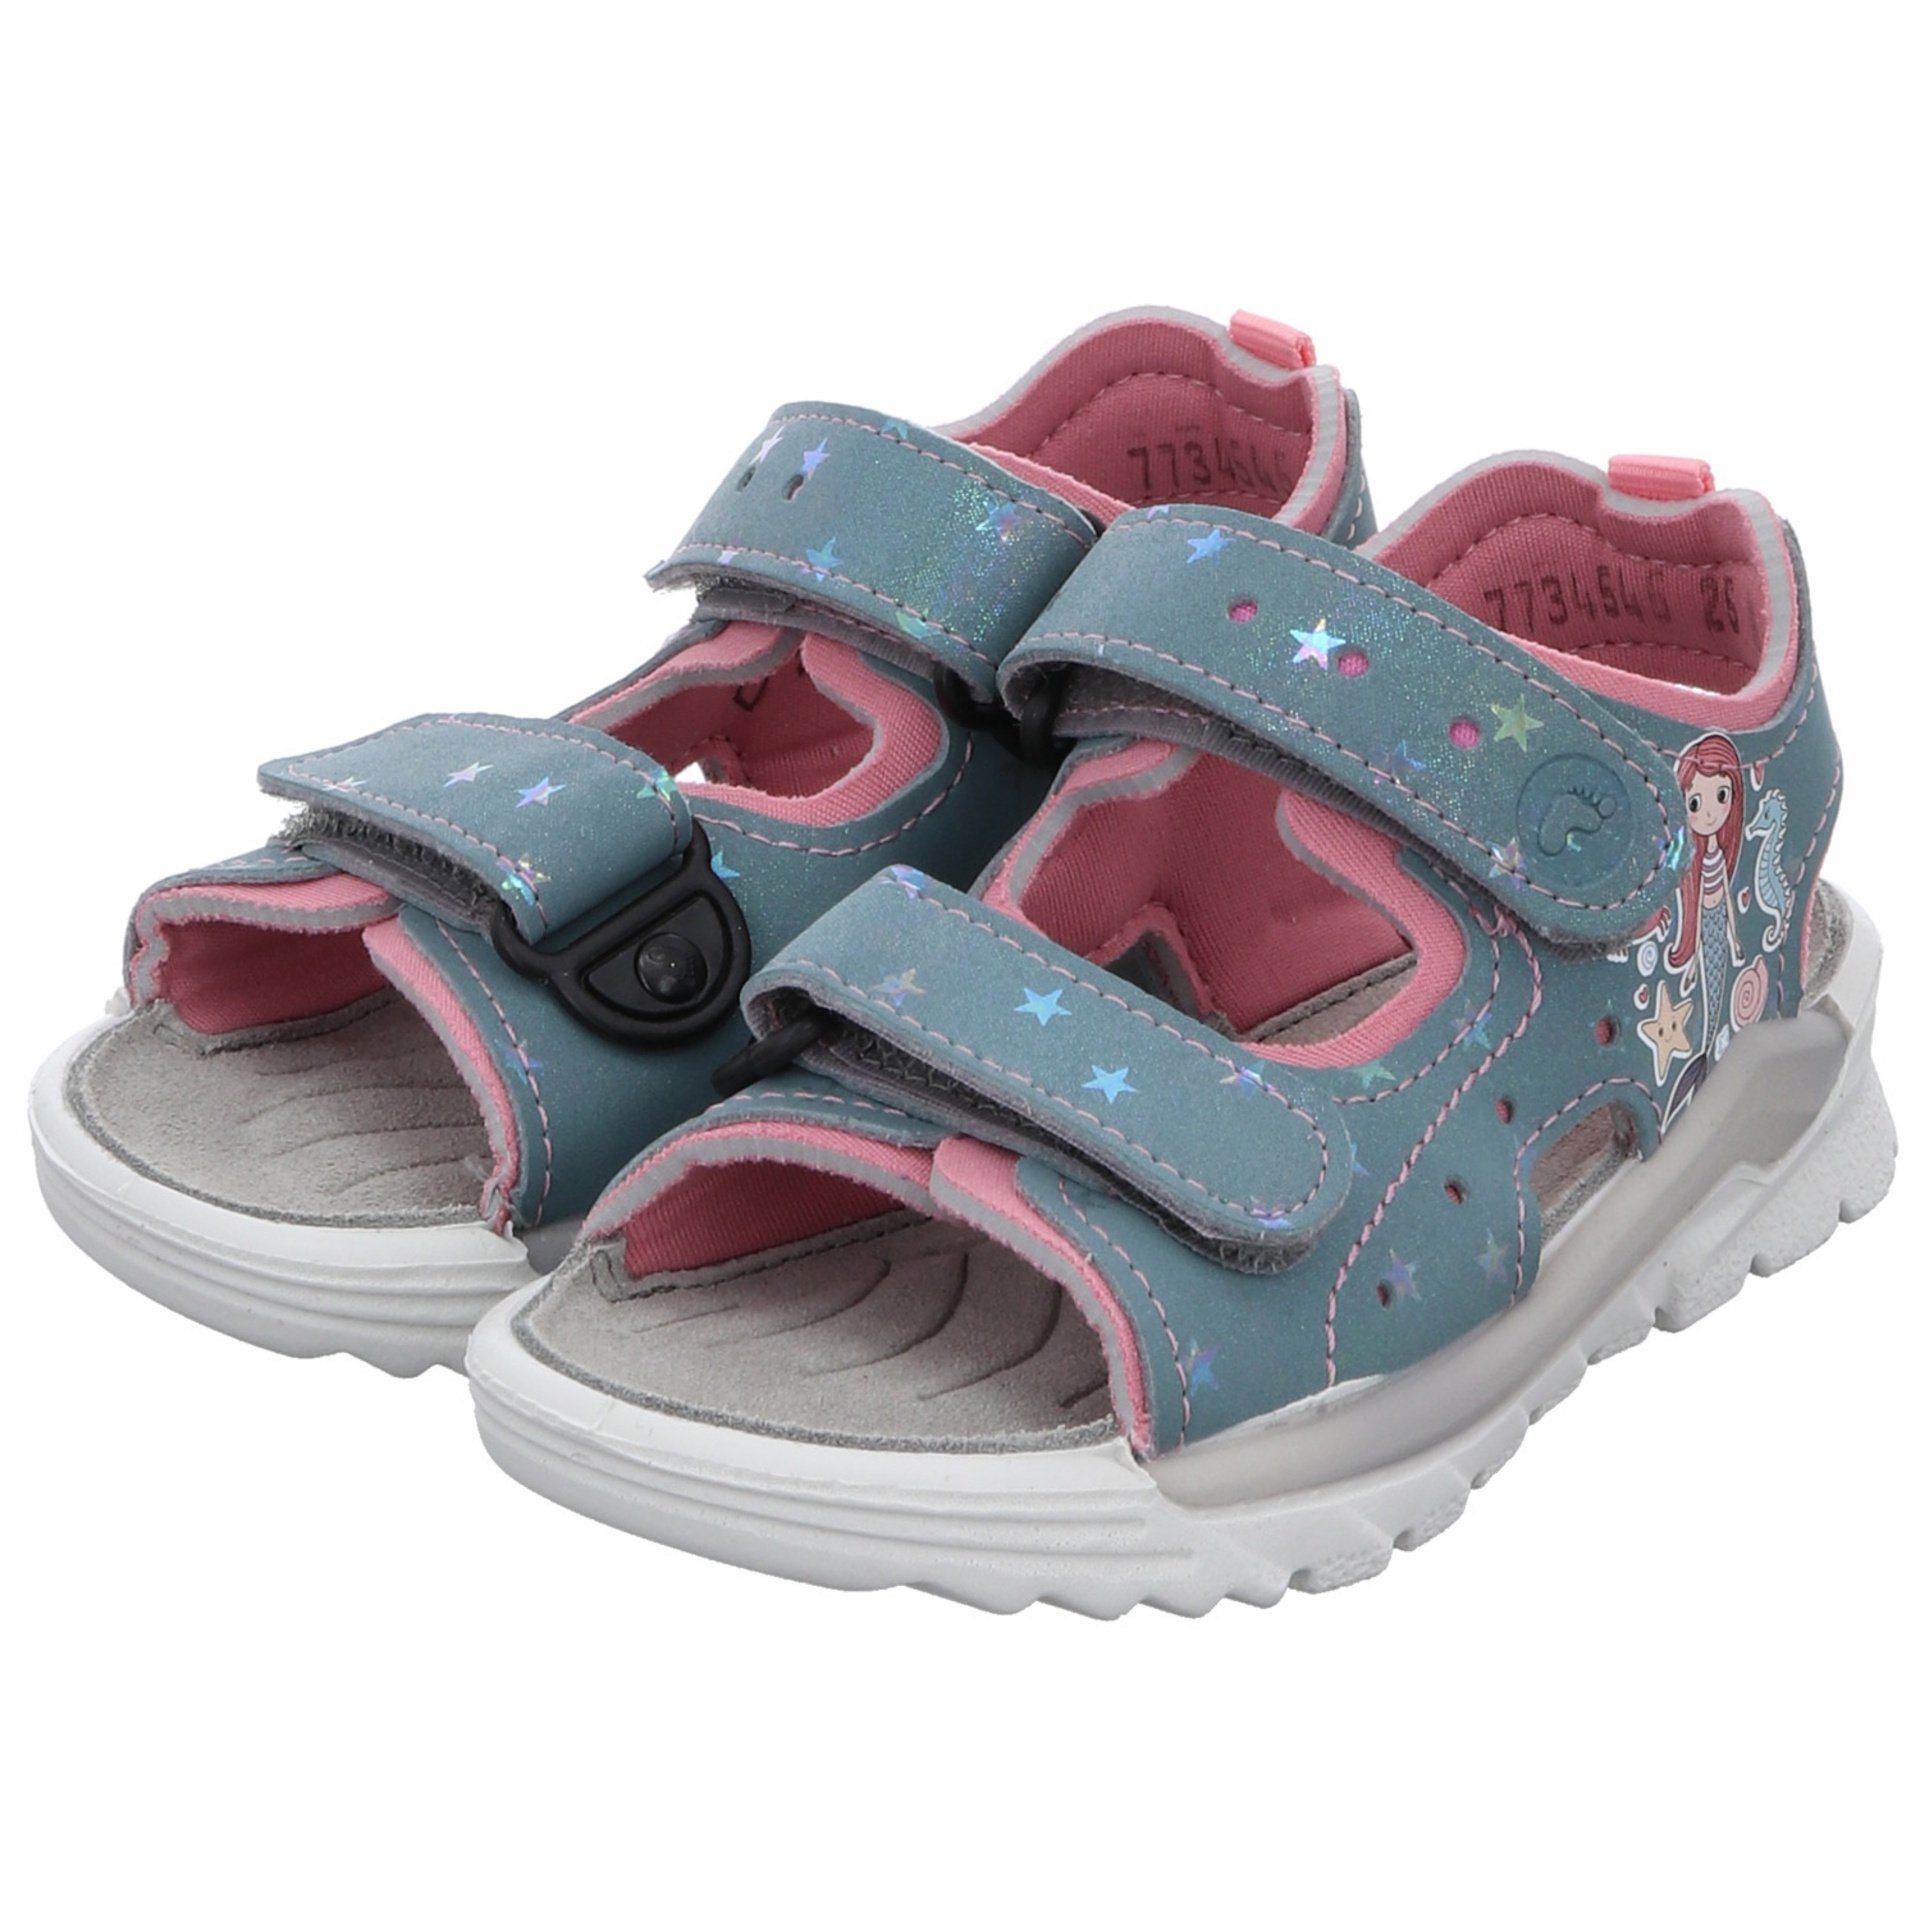 Sandale Surf Schuhe (130) Sandale Sandalen Ricosta Mädchen arctic/mallow Synthetikkombination Kinderschuhe